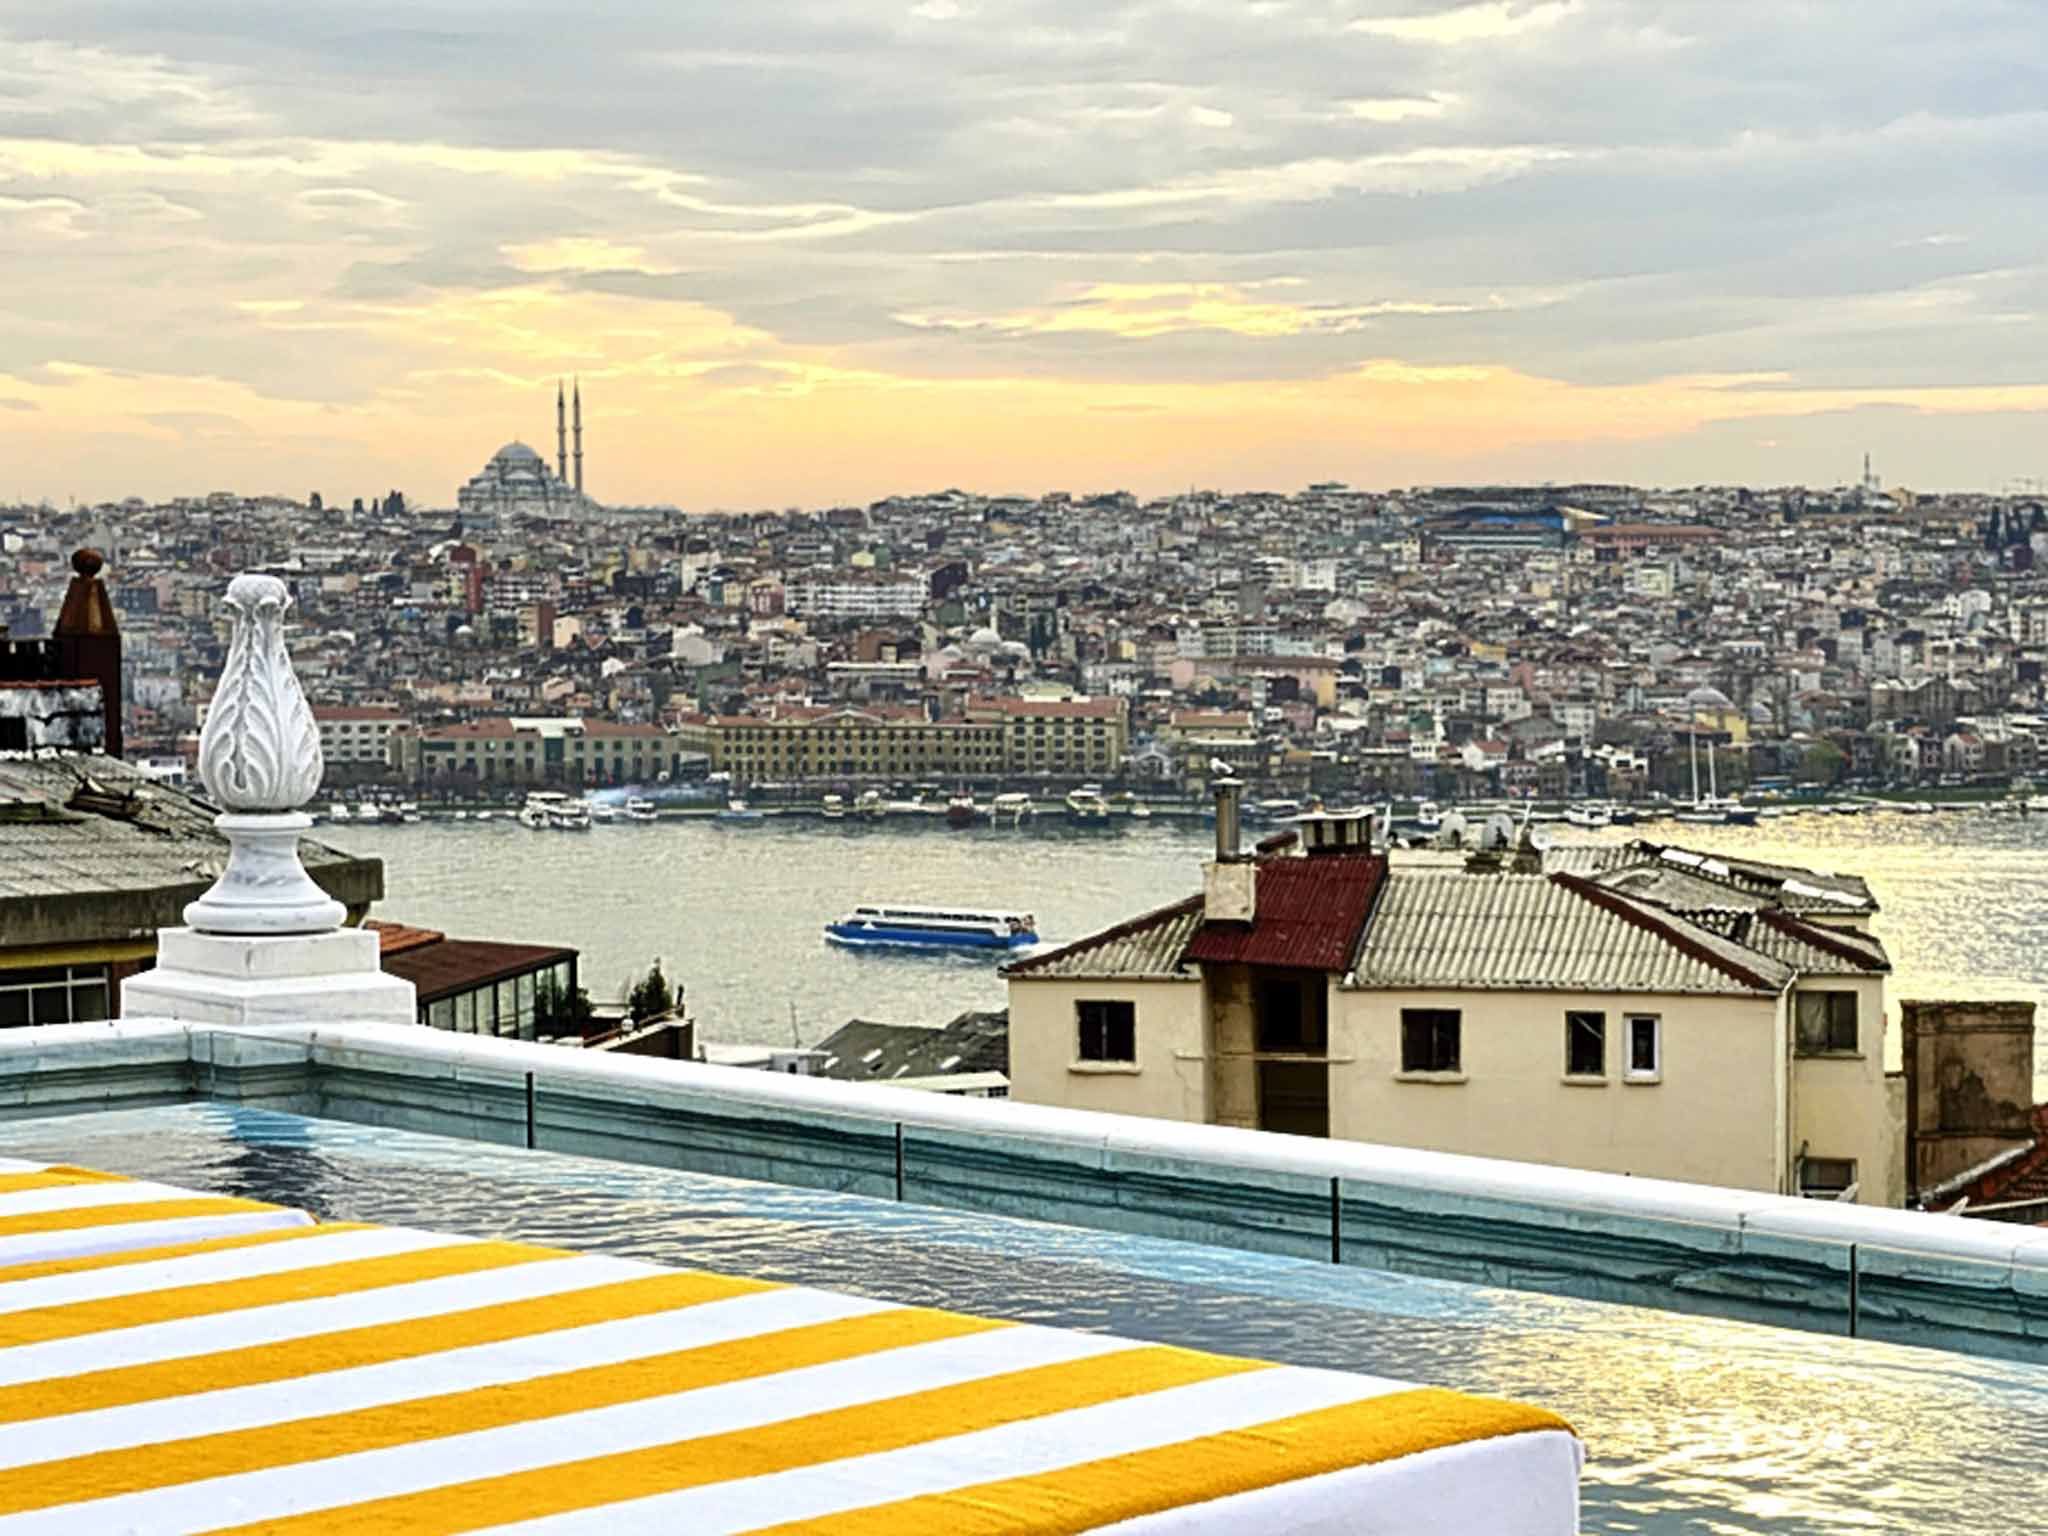 Soho House Istanbul has now opened its doors